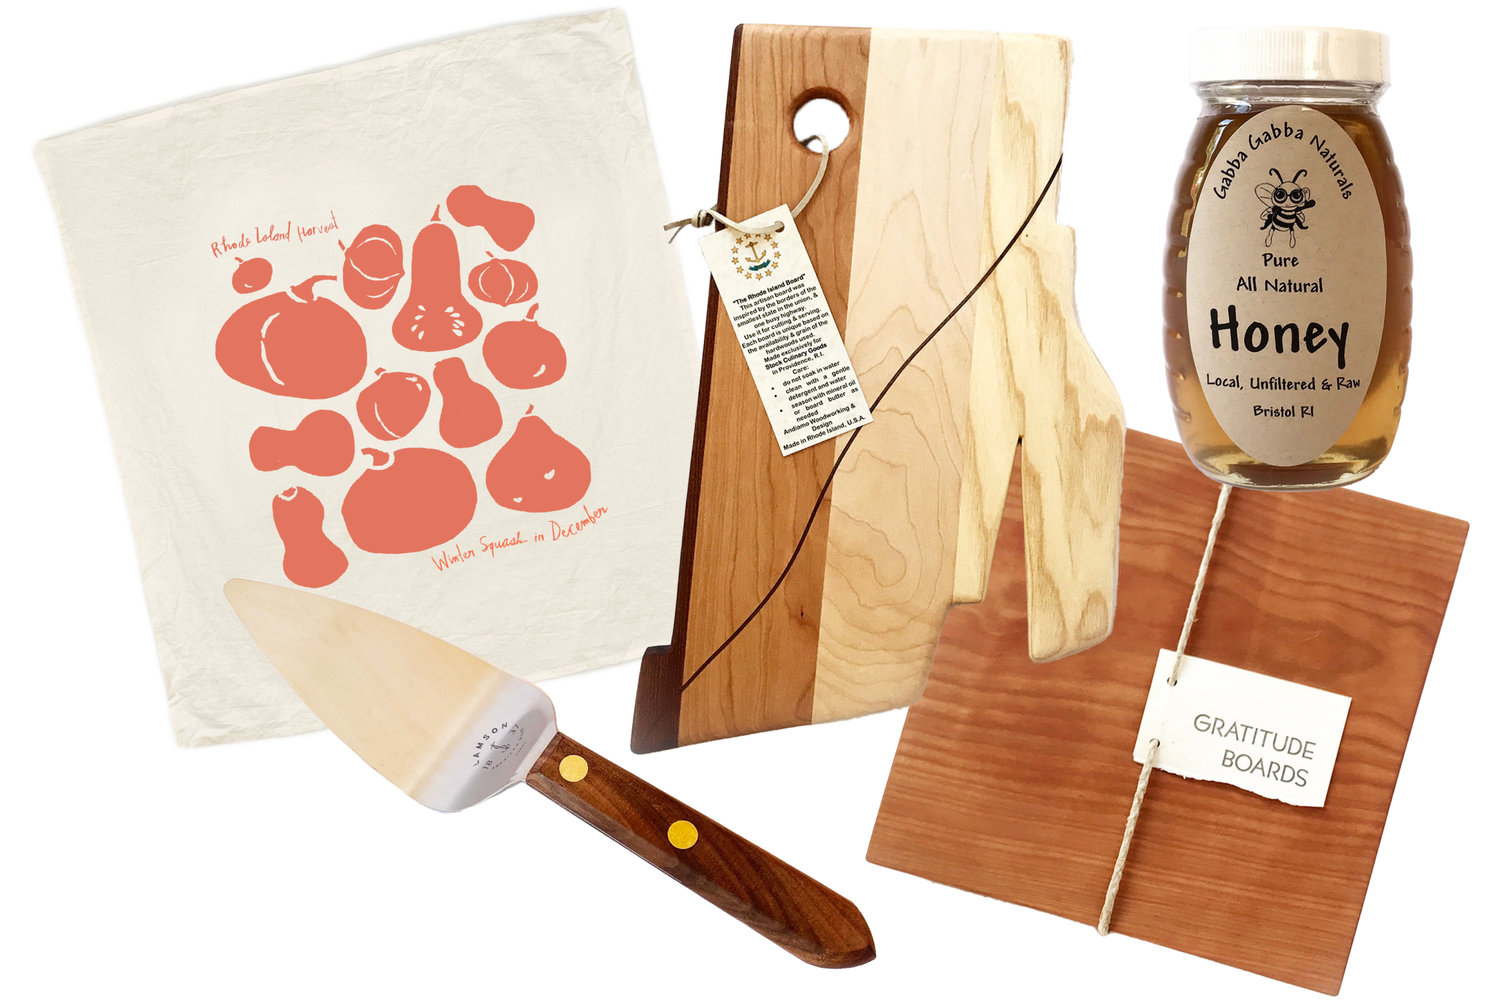 1. Cricicis Design Harvest Tea Towel; 2. Andiamo Woodworking RI Presentation Board; 3. Gabba Gabba Naturals Raw Local Honey; 4. Zuerner Design Gratitude 
Cutting Board; 5. Lamson Pie Server